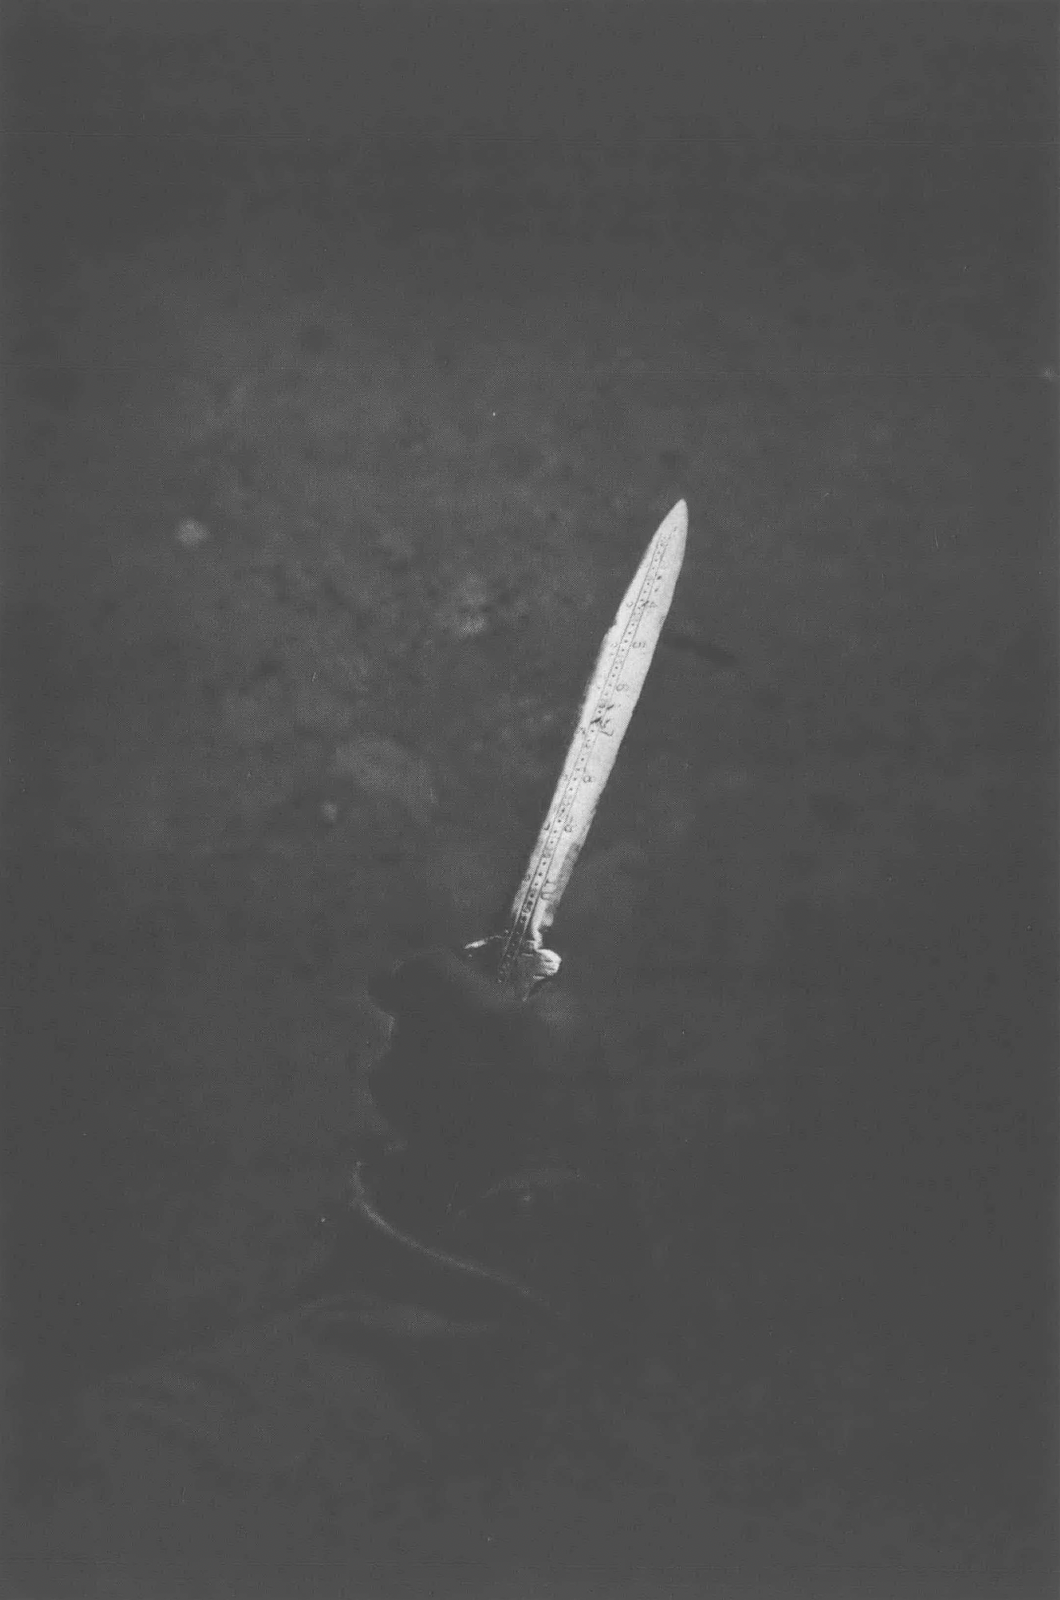 Black and white photo of knife against dark background